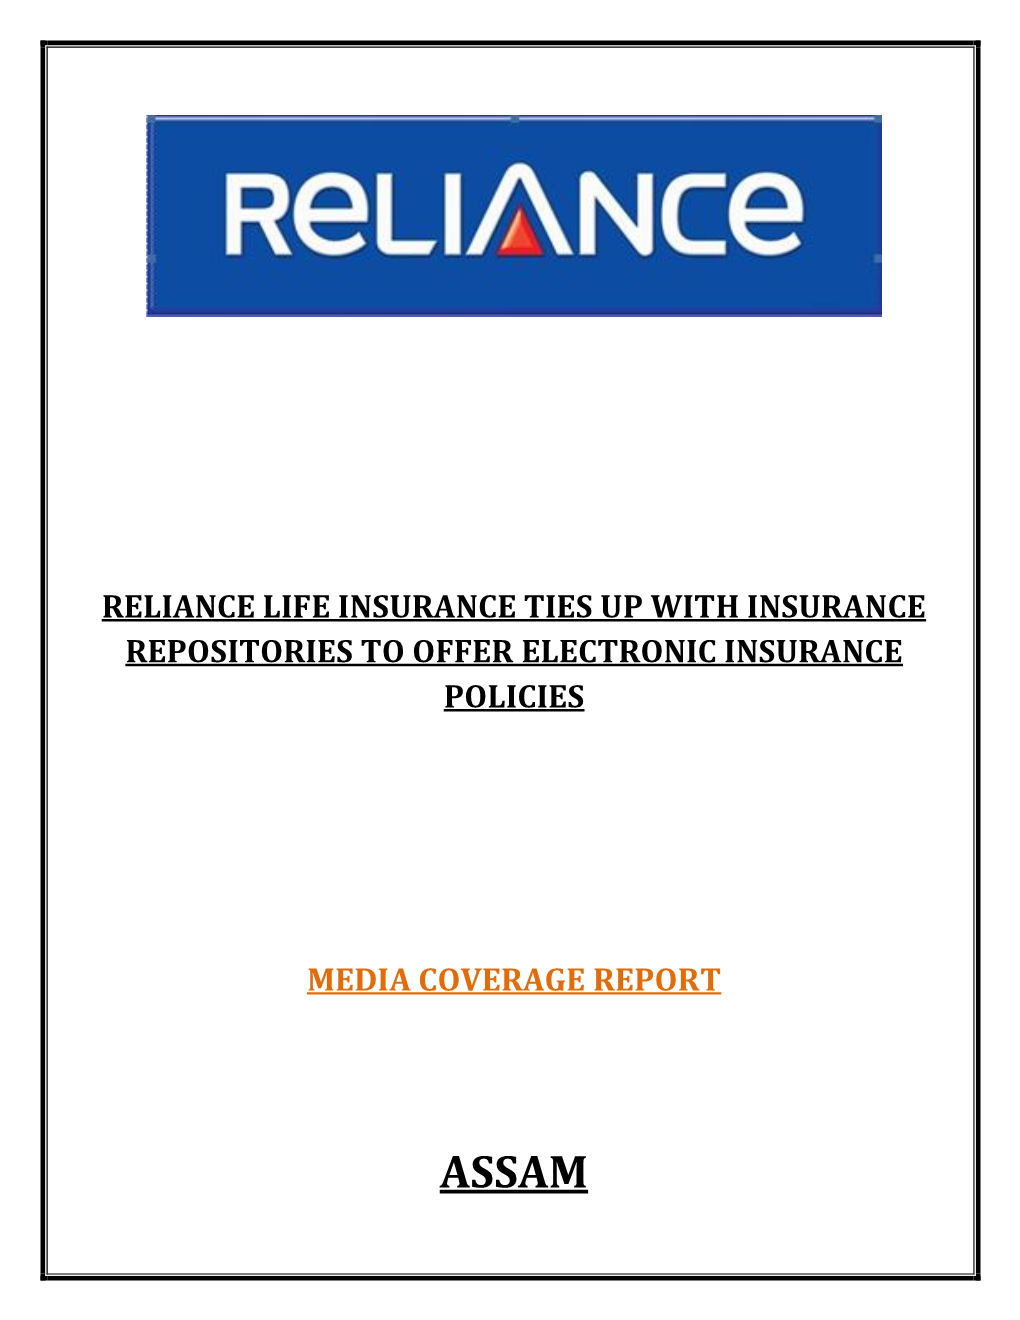 RLI-Electronic Insurance Coverage Report-Assam